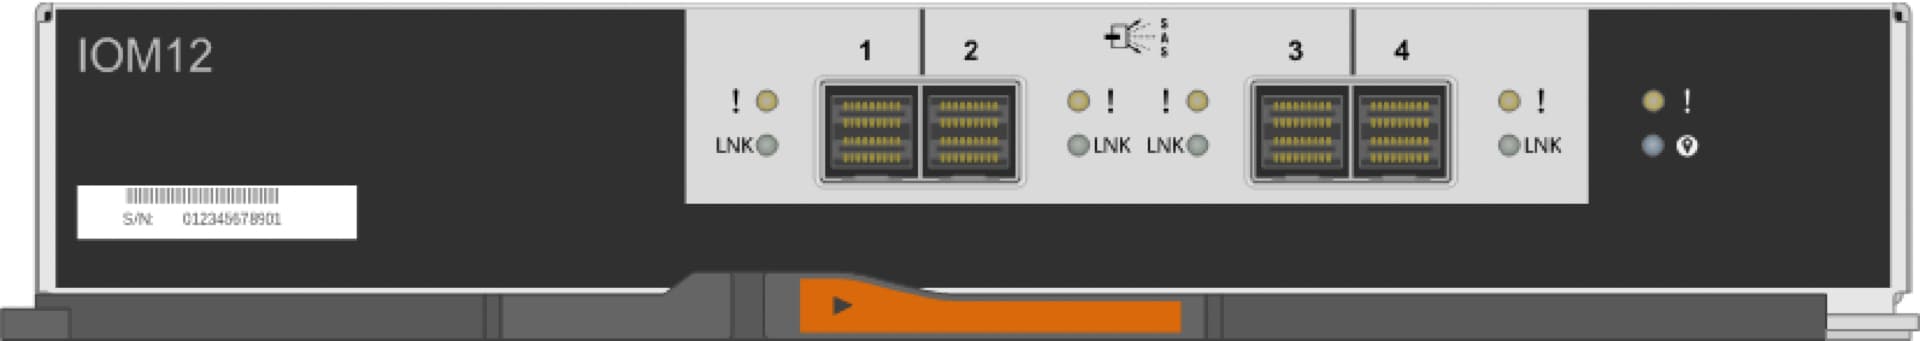 NetApp IOM12 - storage controller - SAS 12Gb/s